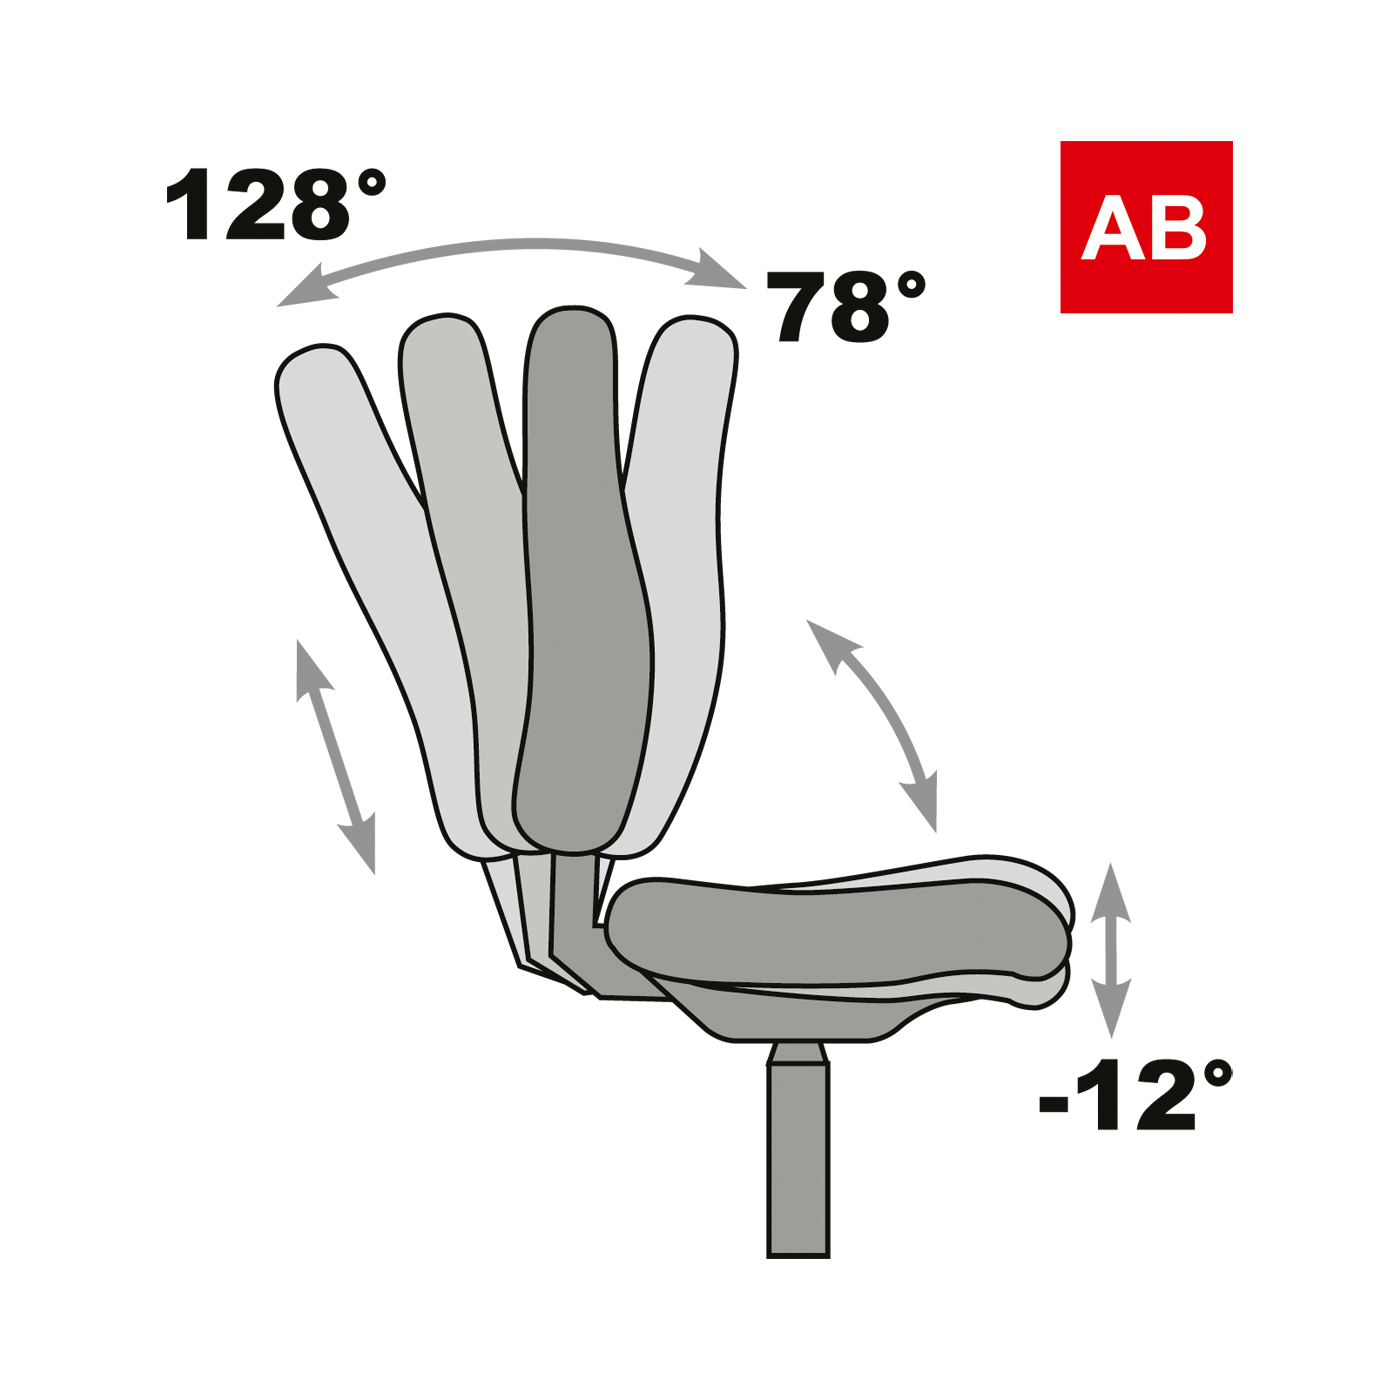 Tec profile Swivel Chair, AB, Artificial Leather Black - 1 piece